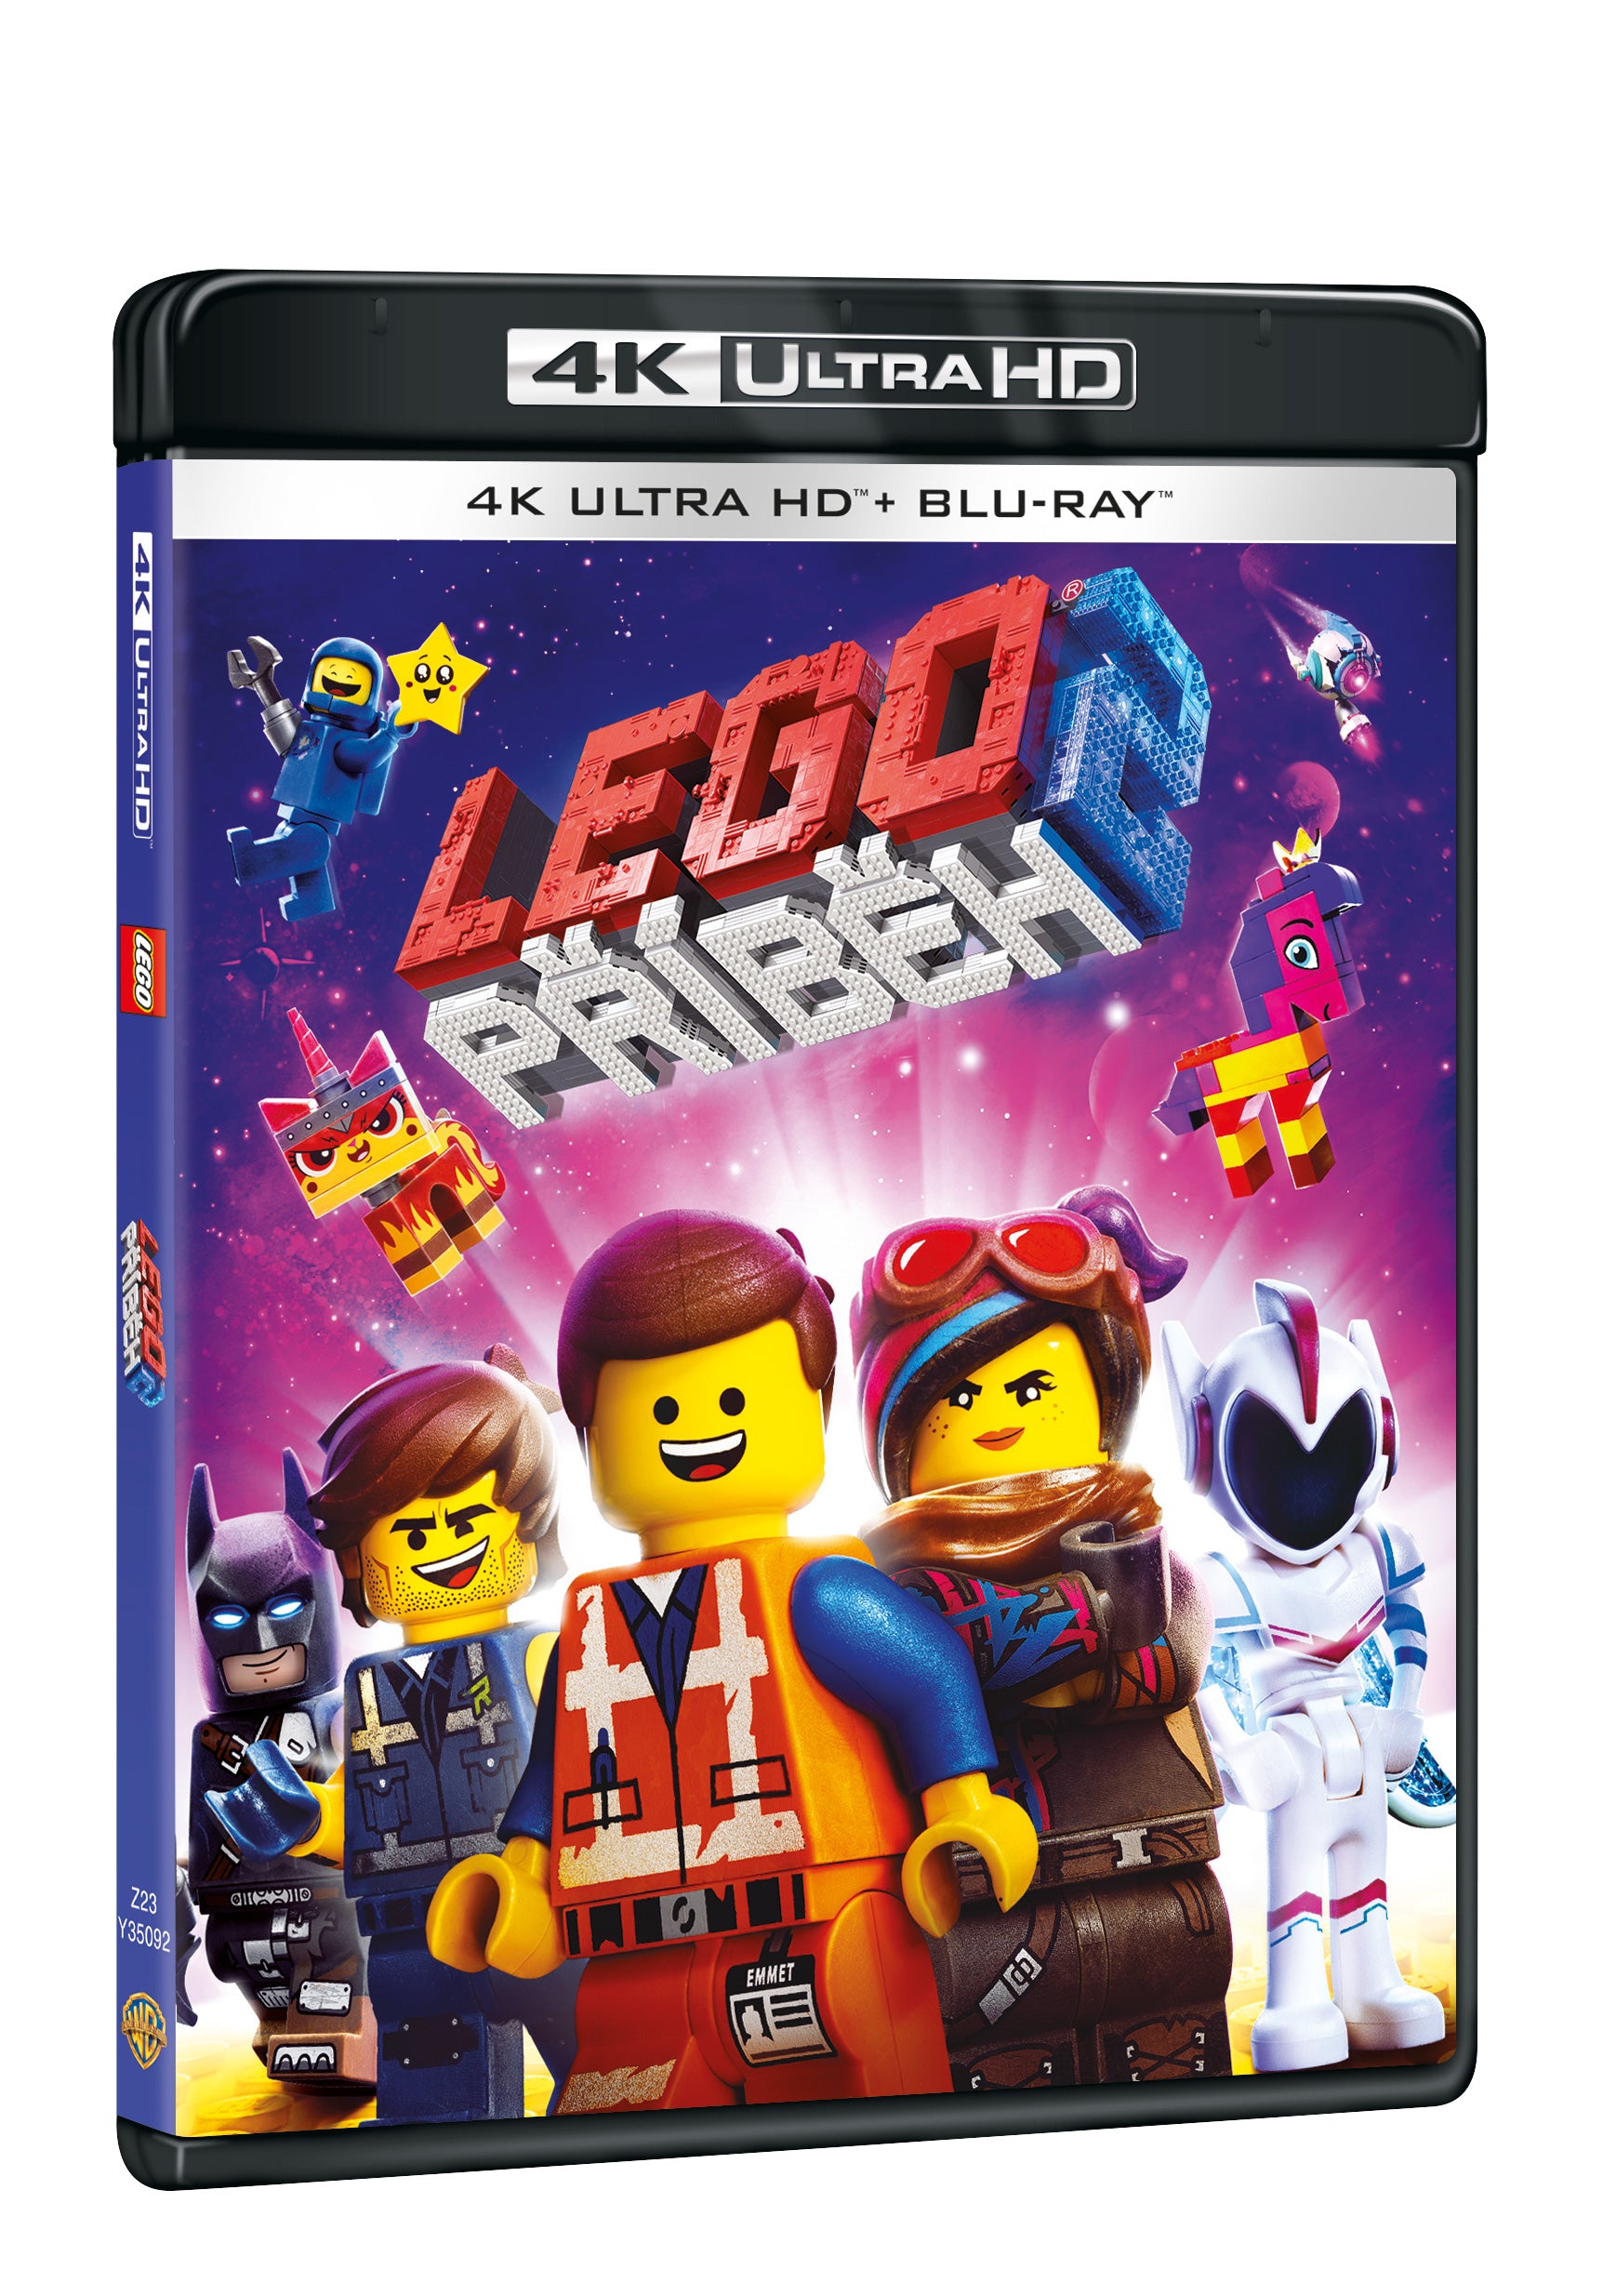 Lego pribeh 2 2BD (UHD+BD) / Lego Movie 2 - Czech version